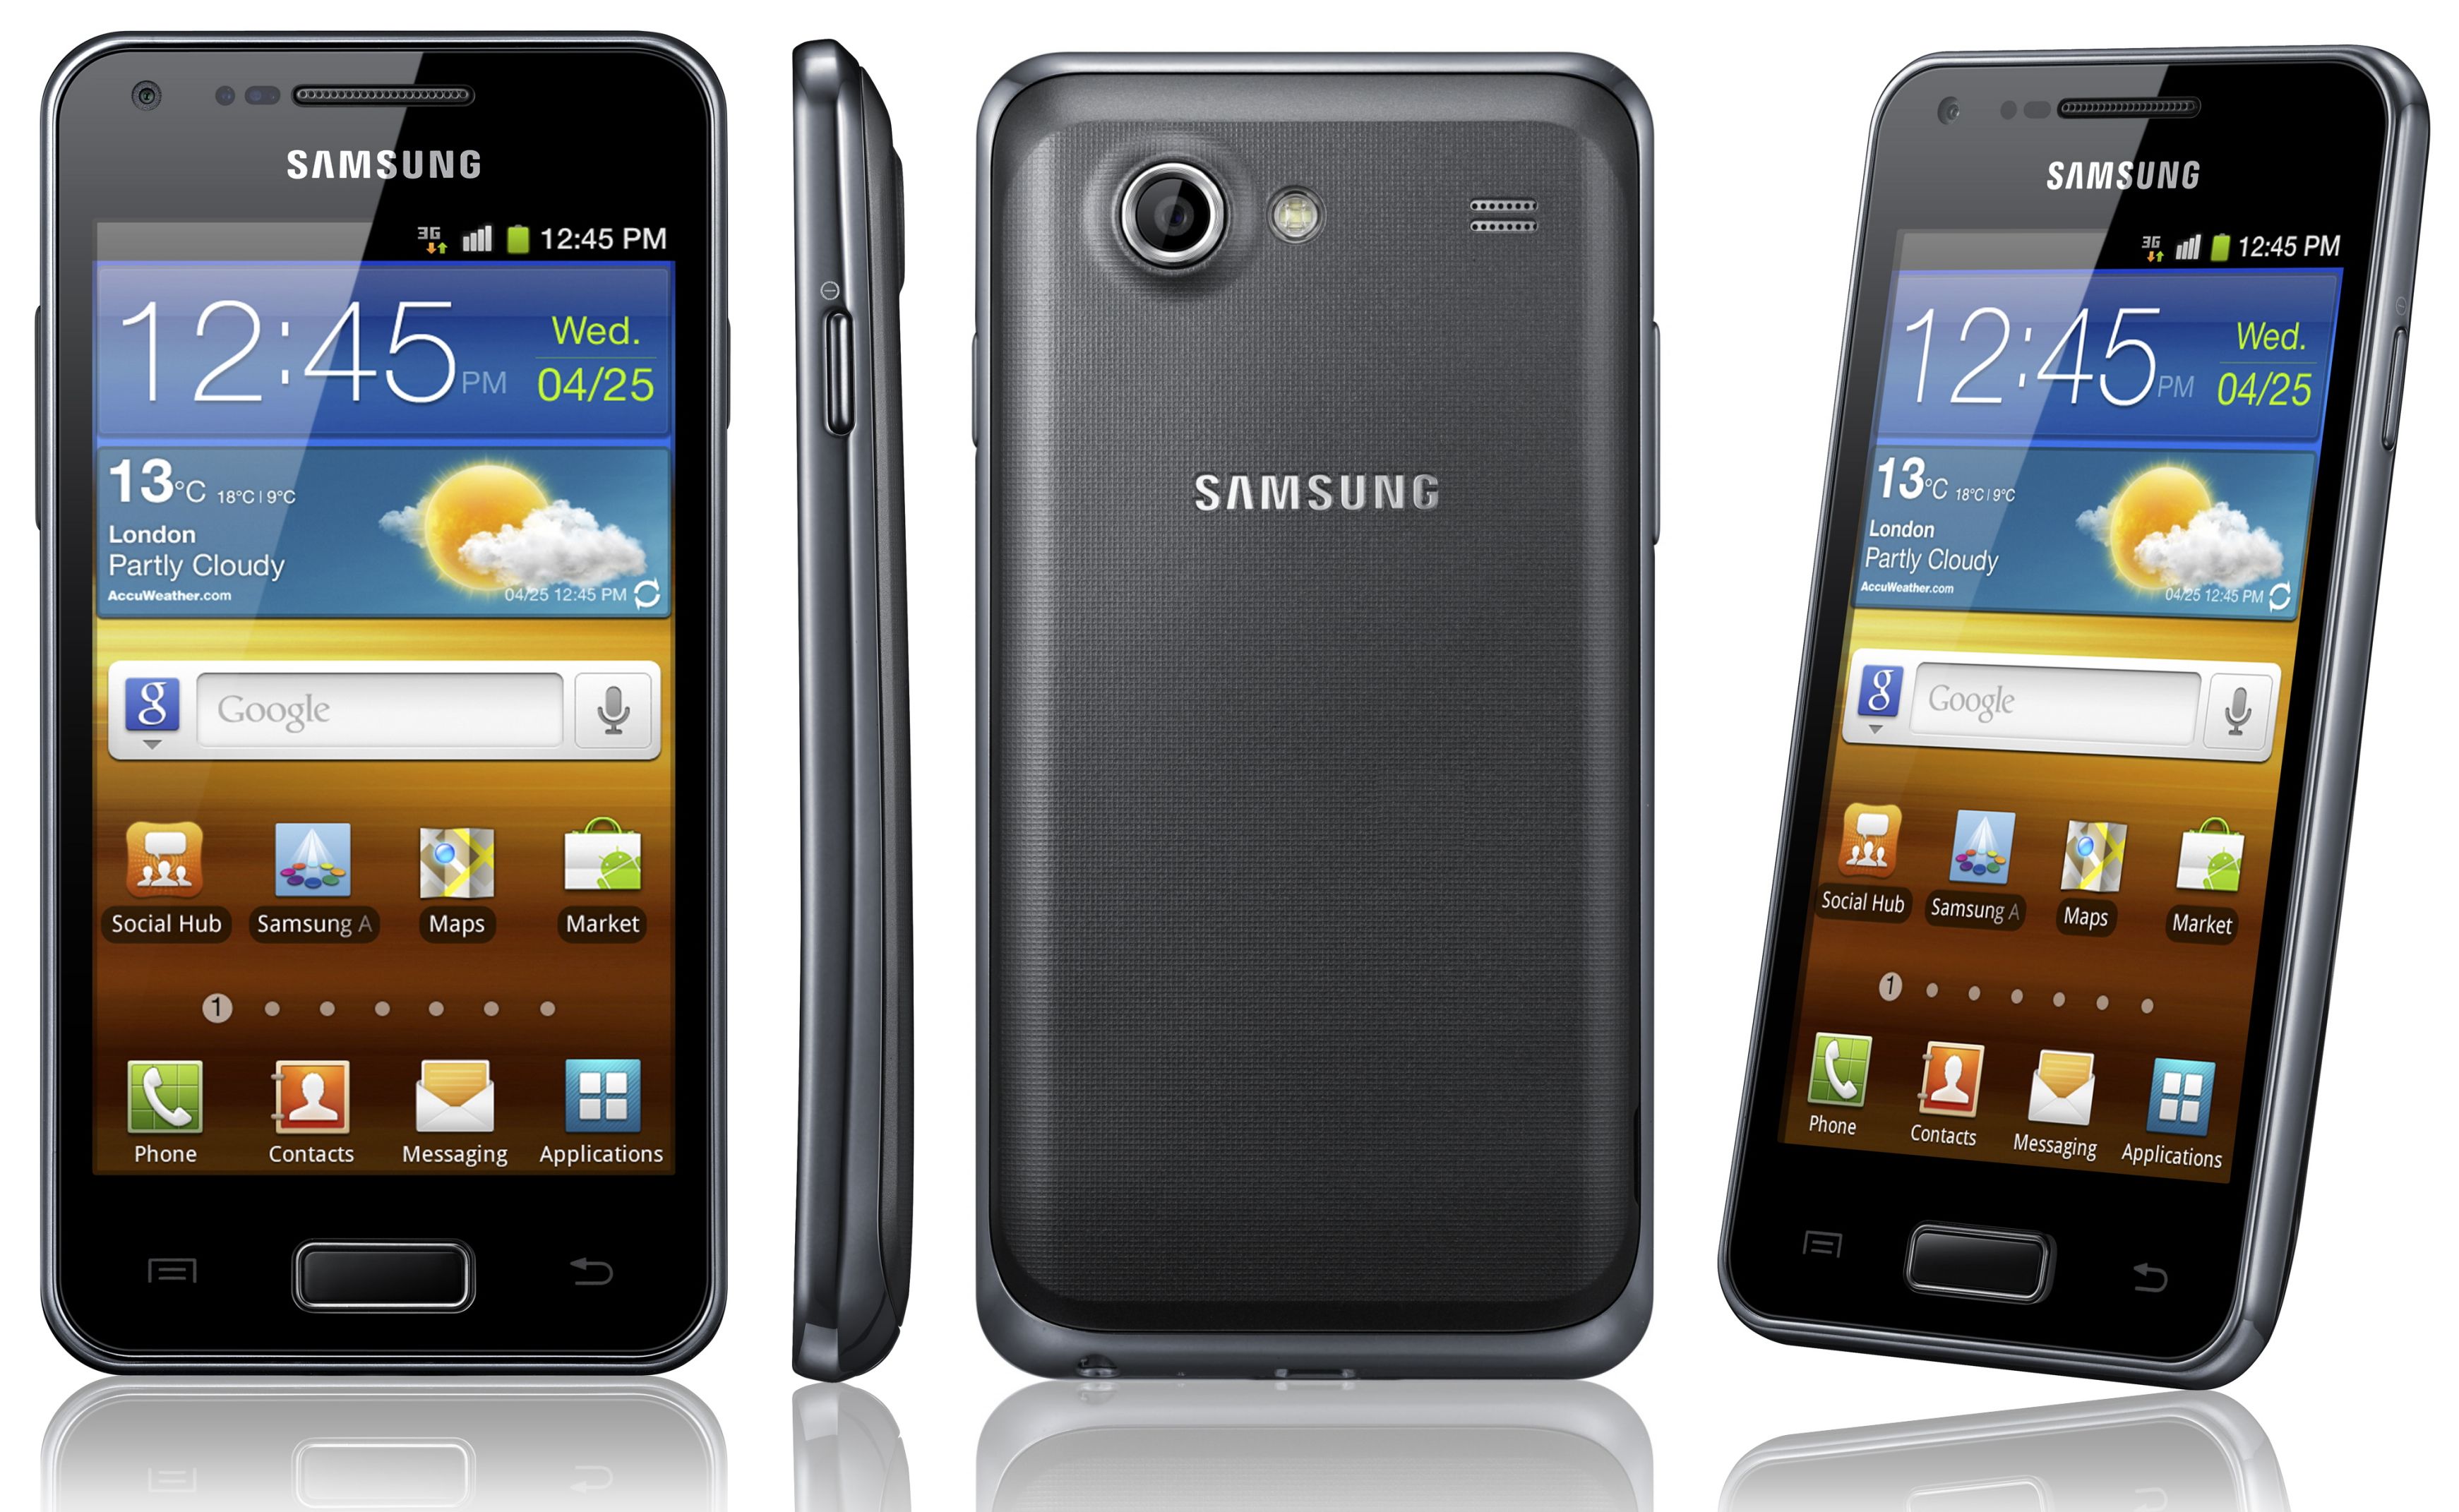 Samsung adds Galaxy S Advance to its portfolio